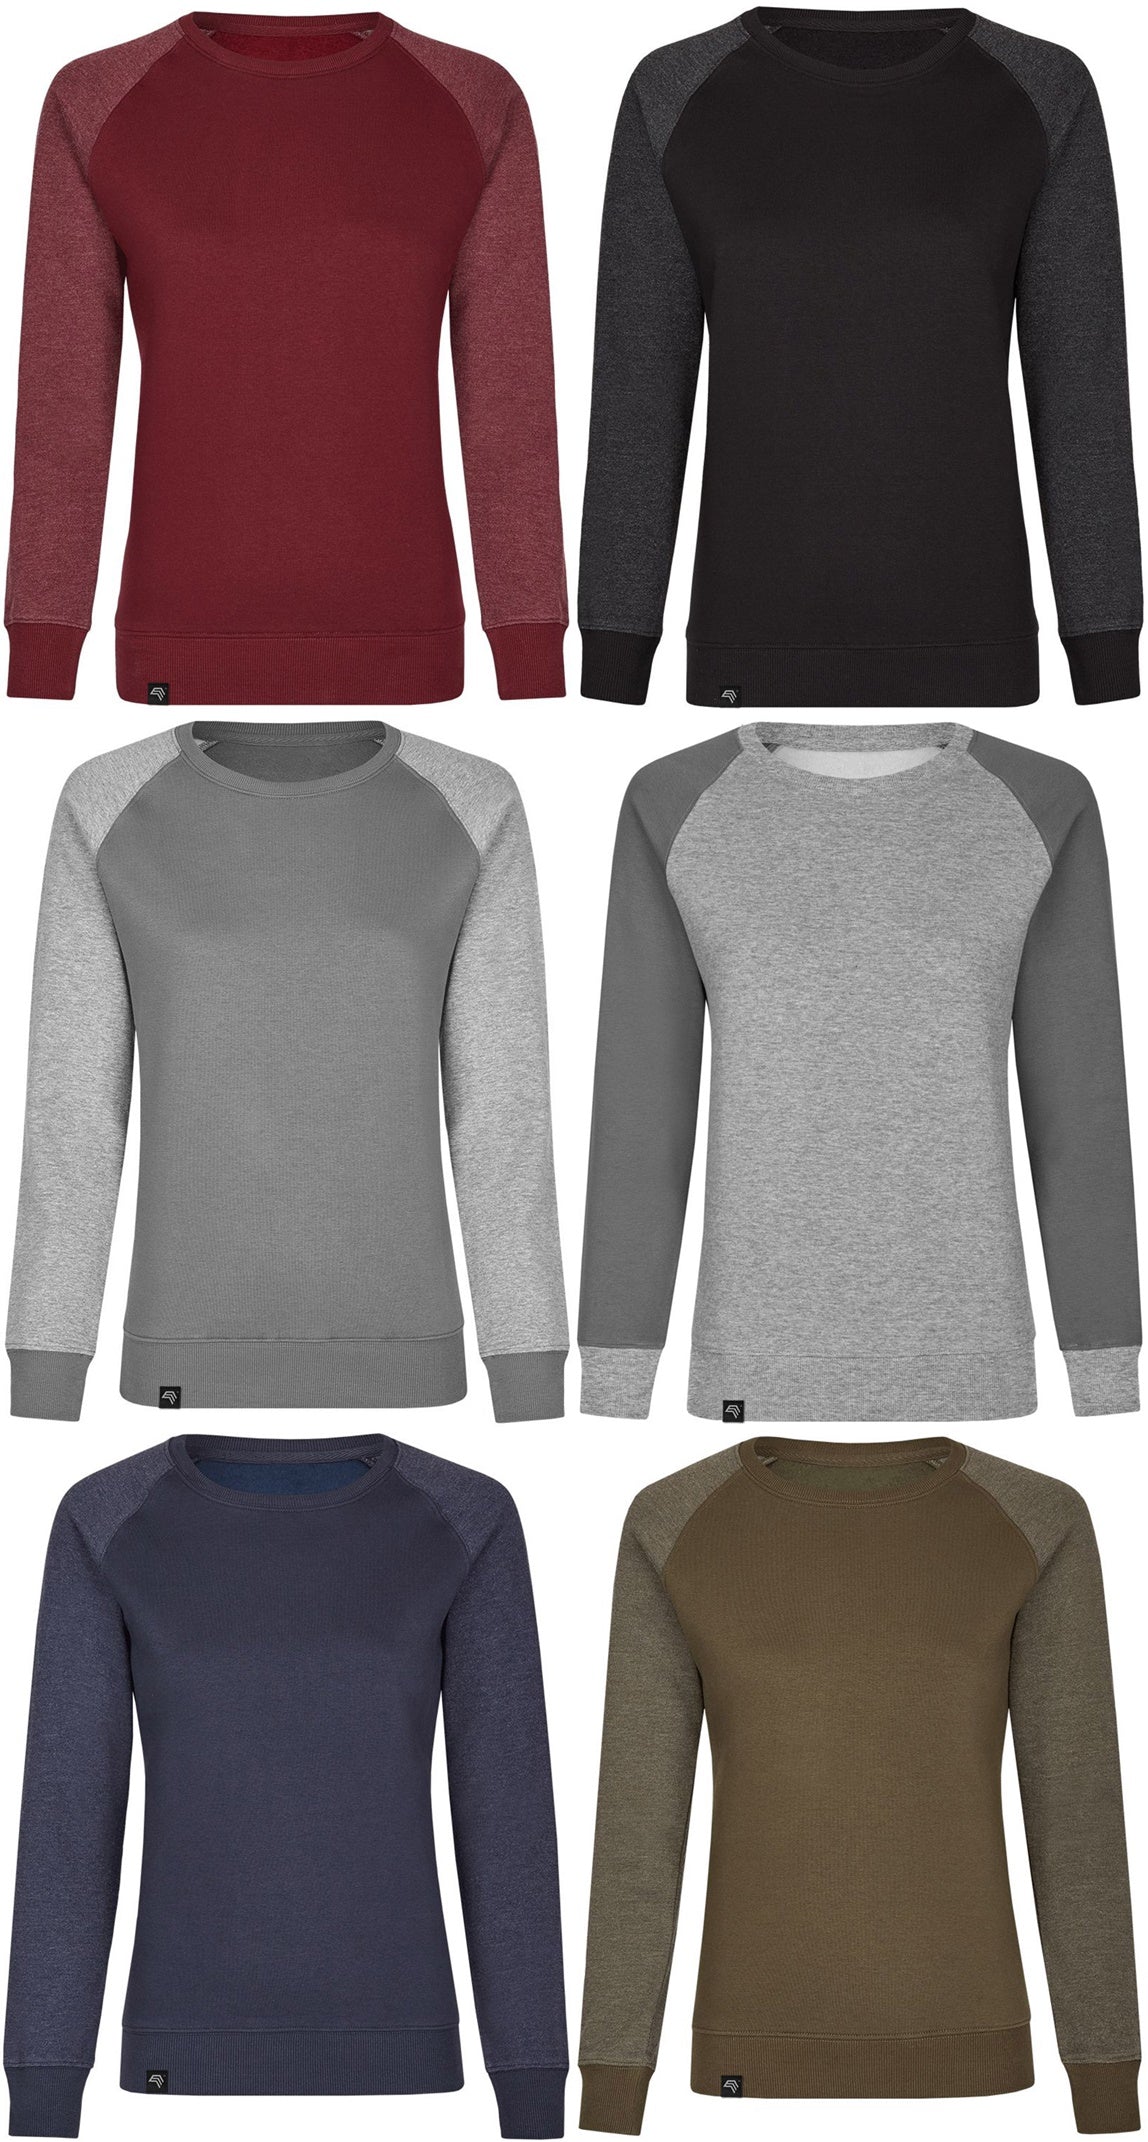 MMT 0520 ― Damen Bi-Color Sweatshirt - Grau Melange / Solid